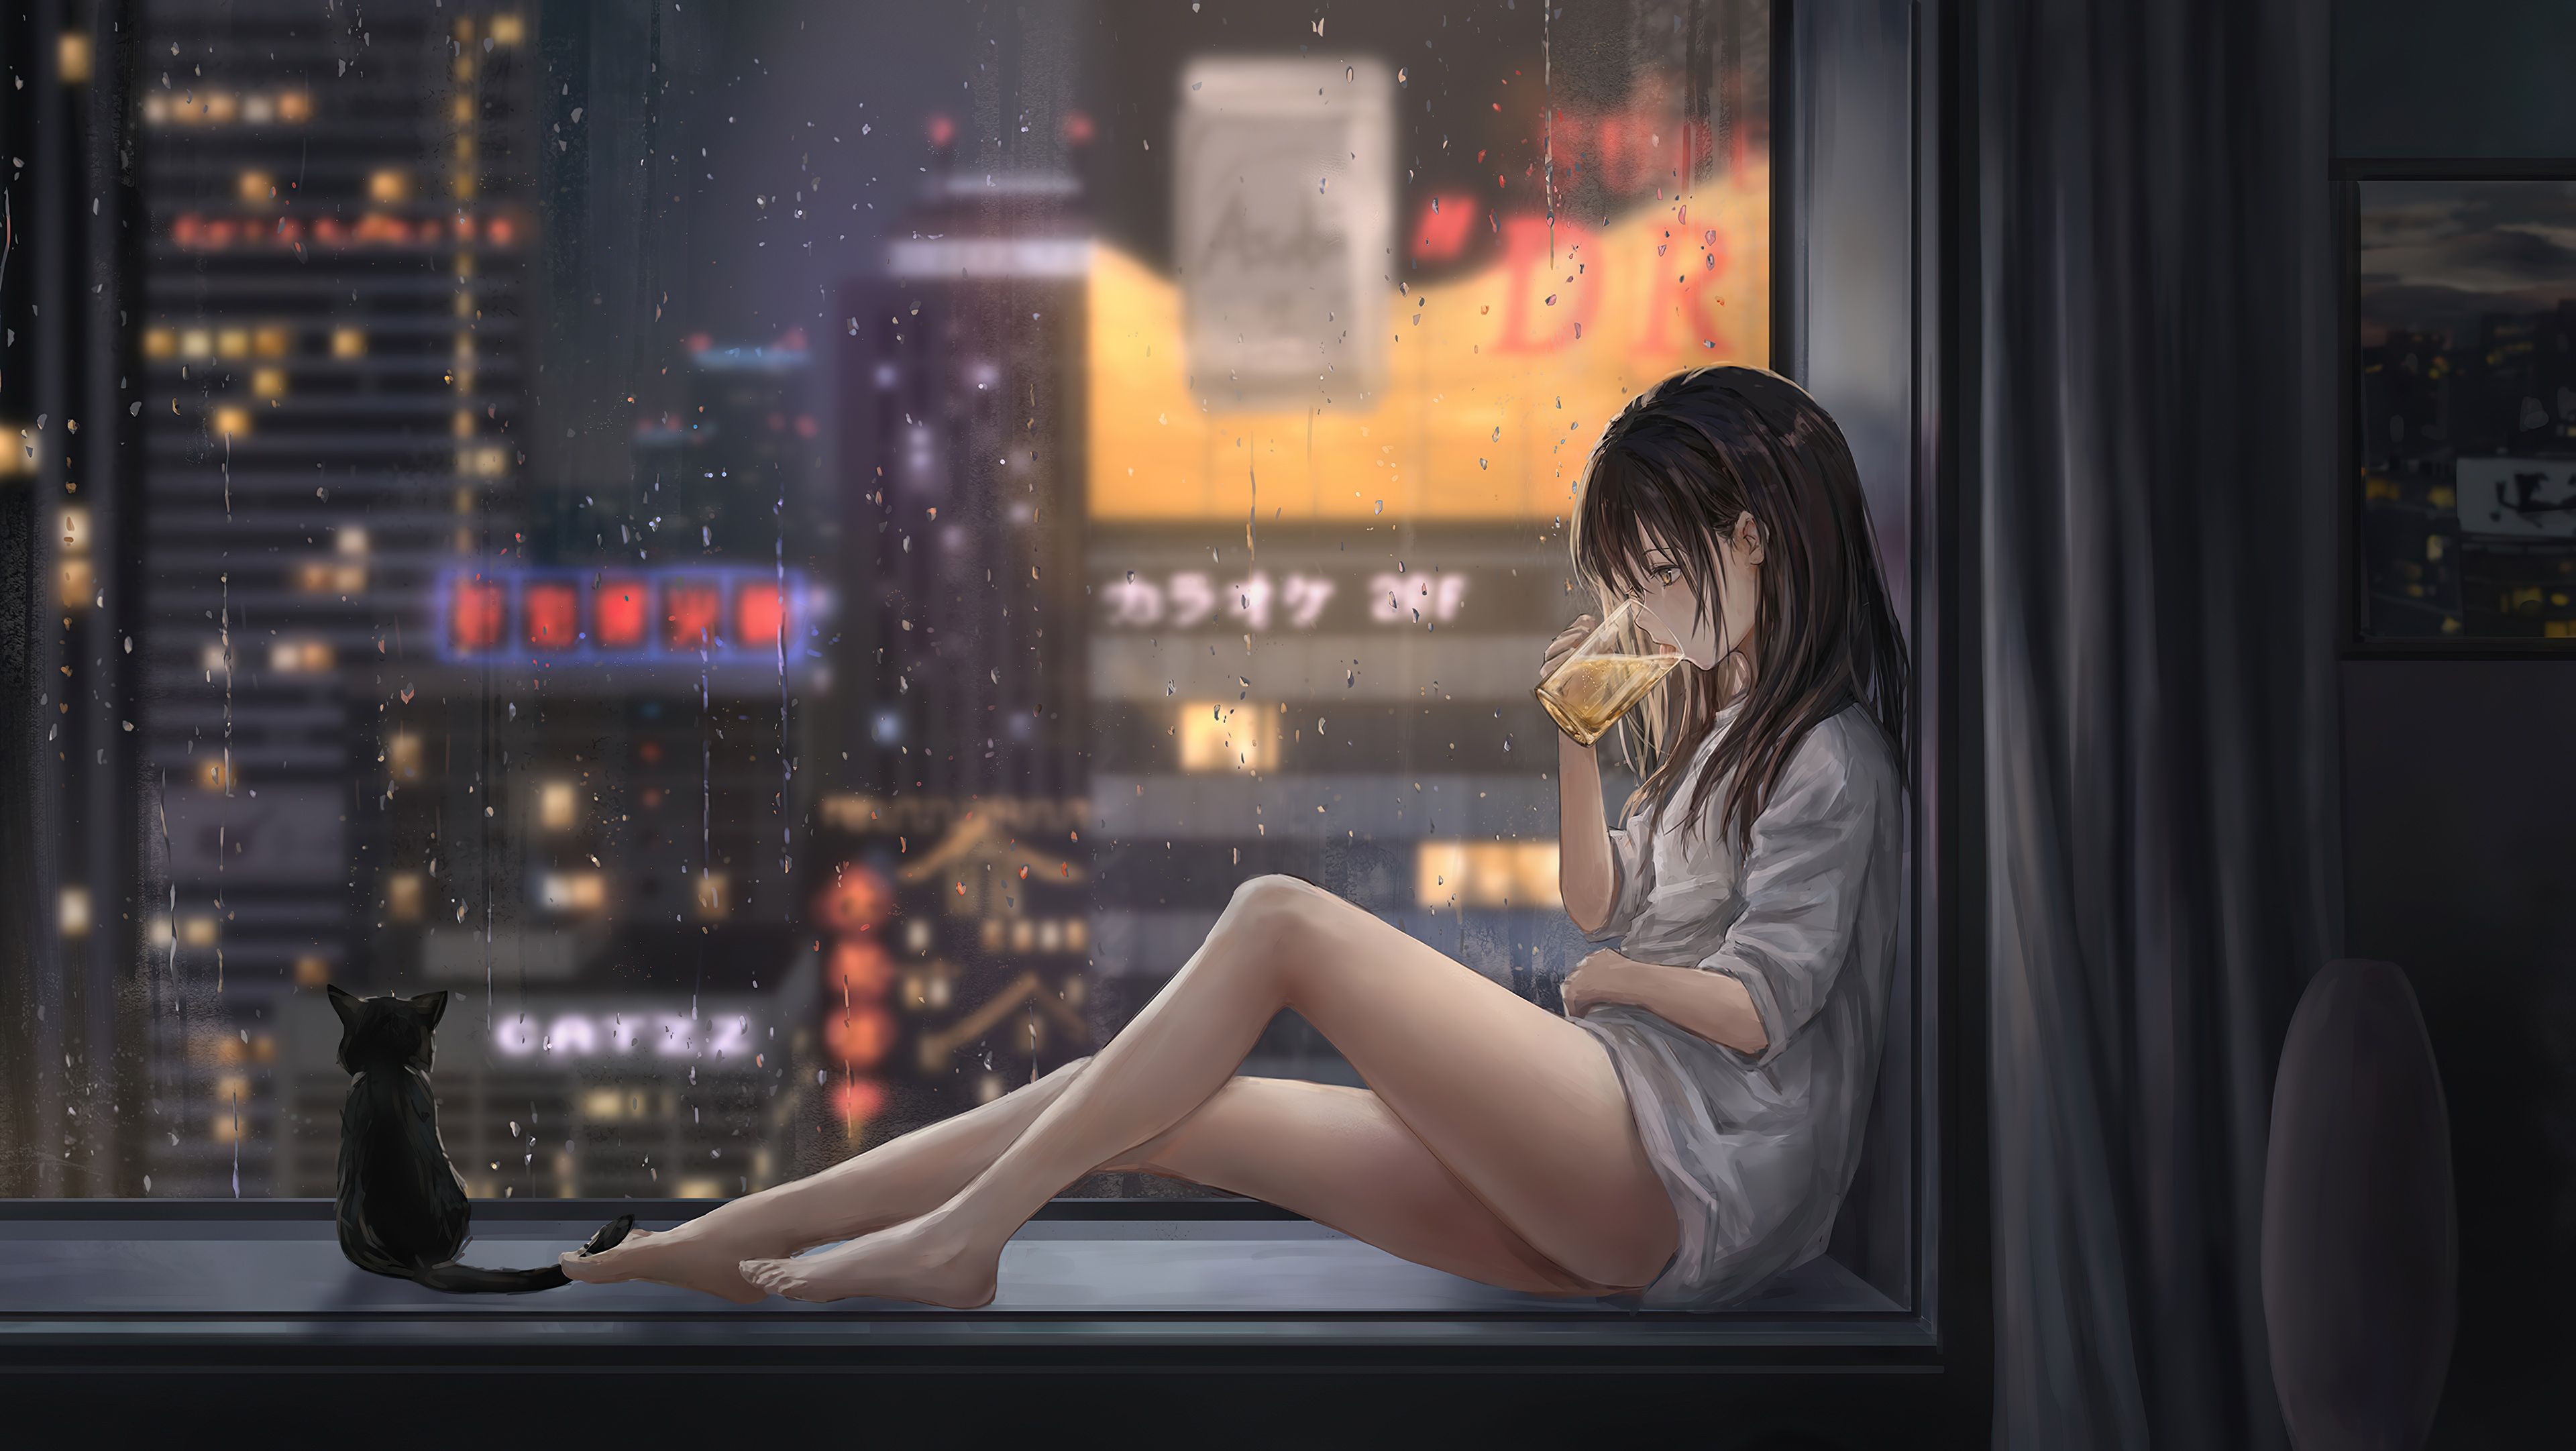 Anime Night Rain Wallpapers - Wallpaper Cave